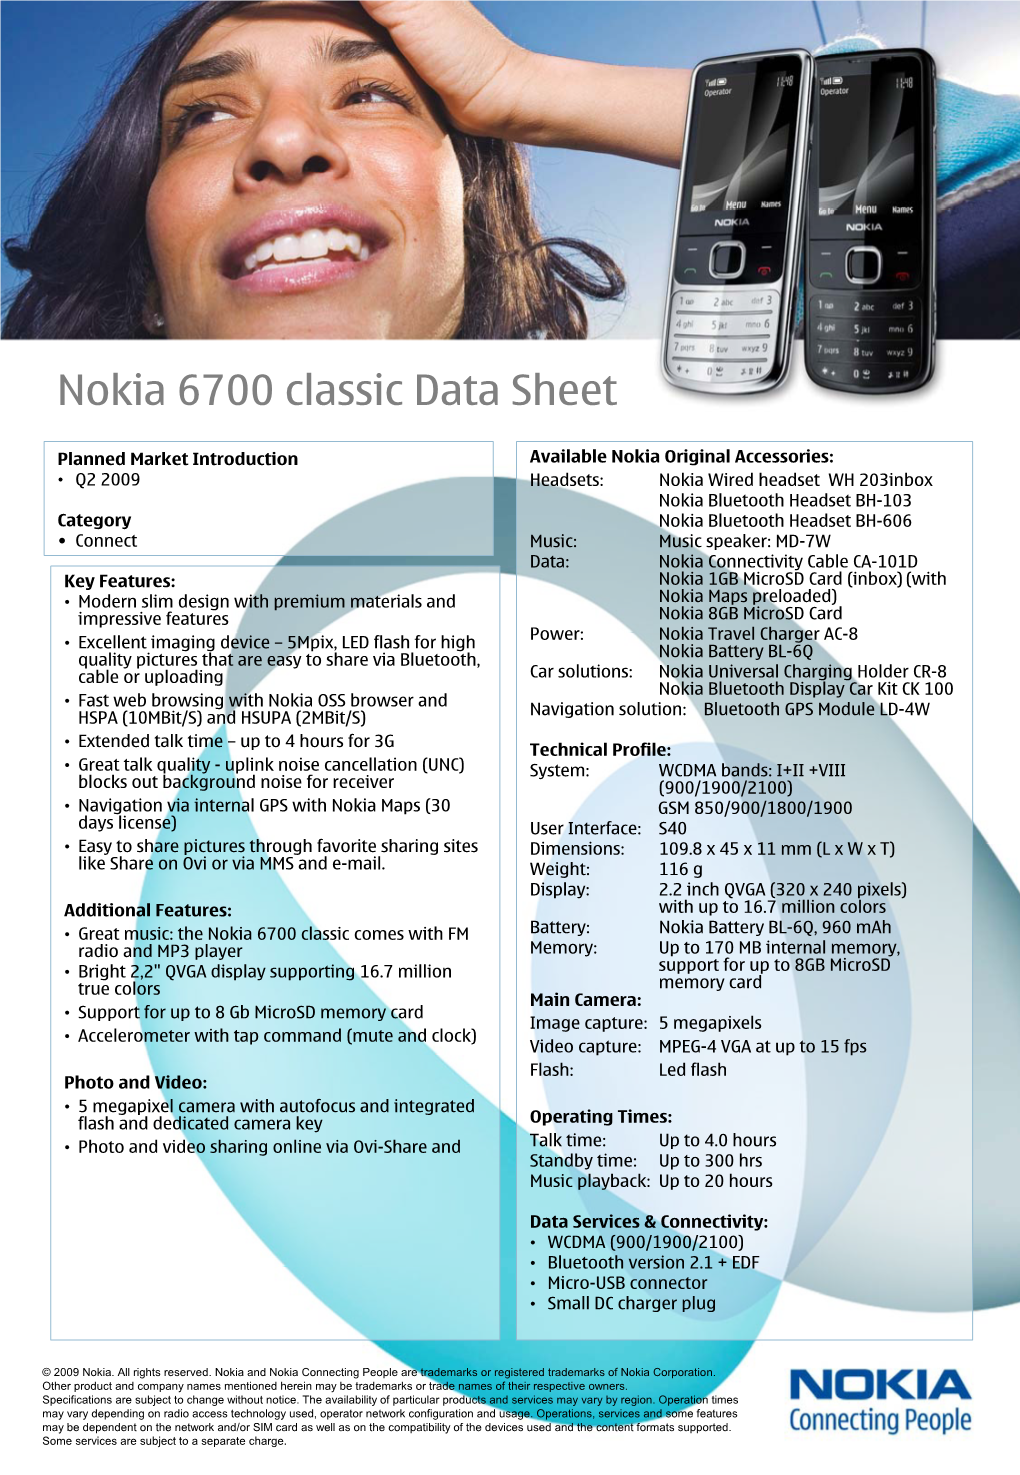 Nokia 6700 Classic Data Sheet